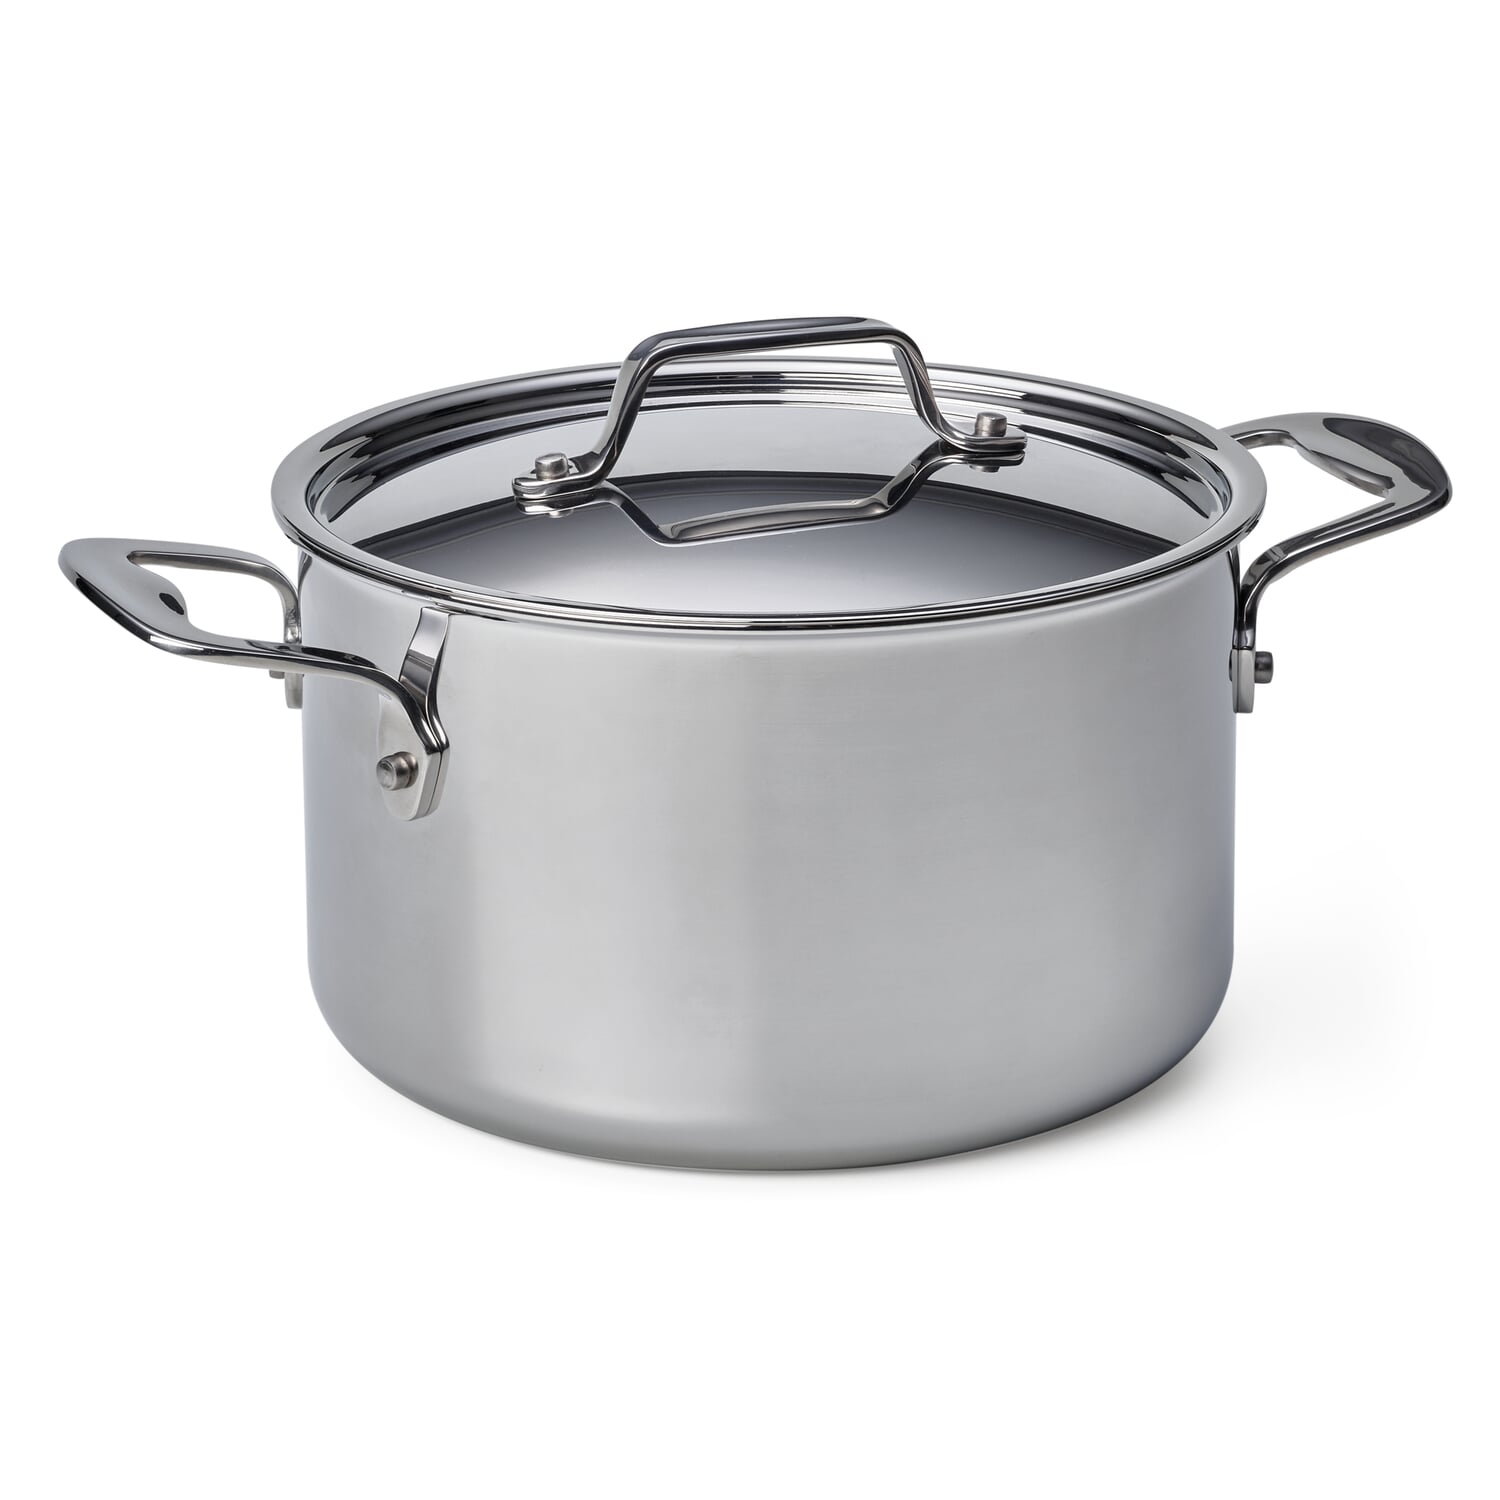 American Kitchen Stainless Steel Casserole Pan